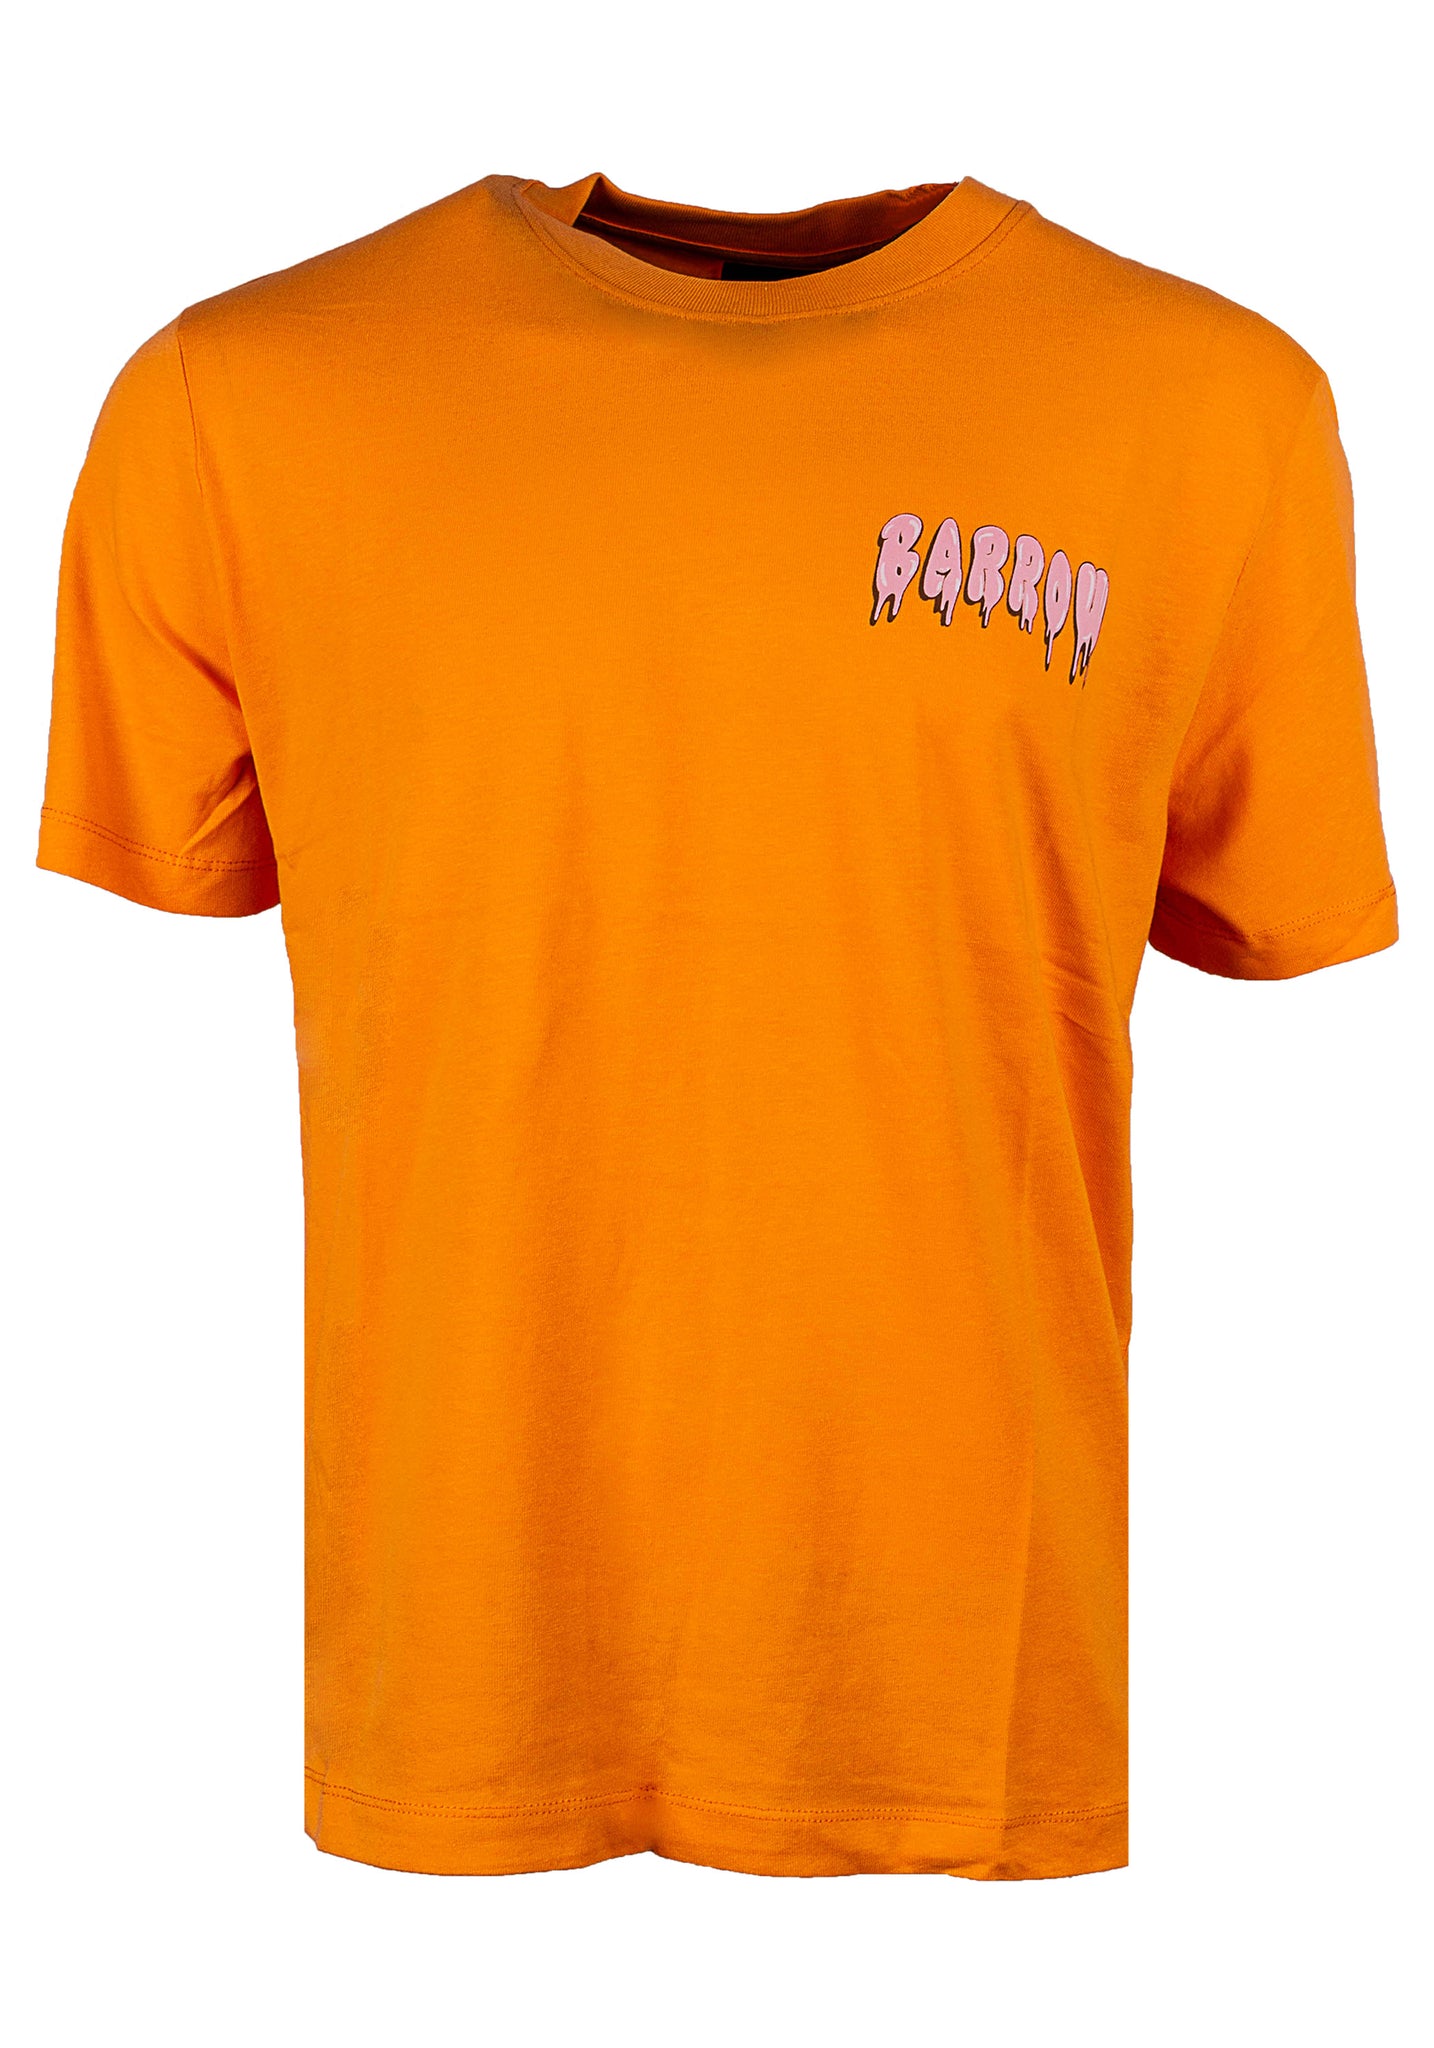 T-Shirt BARROW Men color Orange